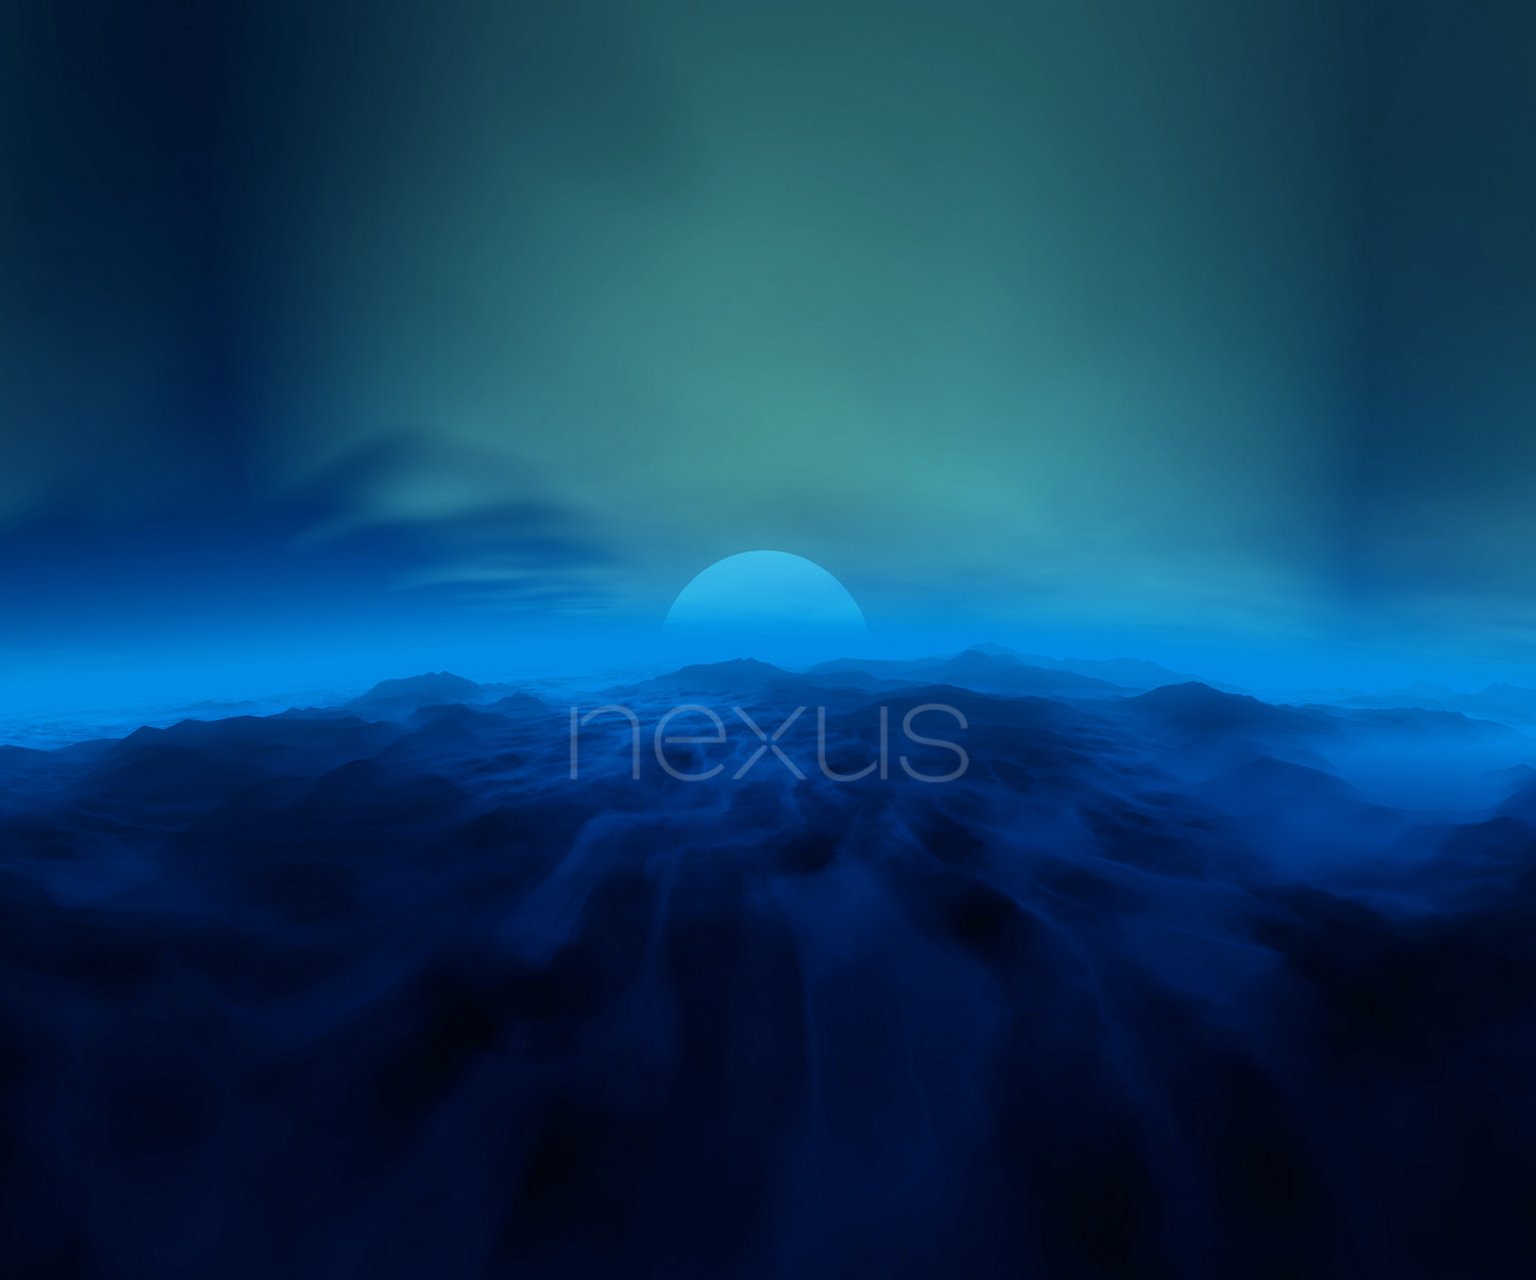 Nexus Logo Wallpaper High Resolution